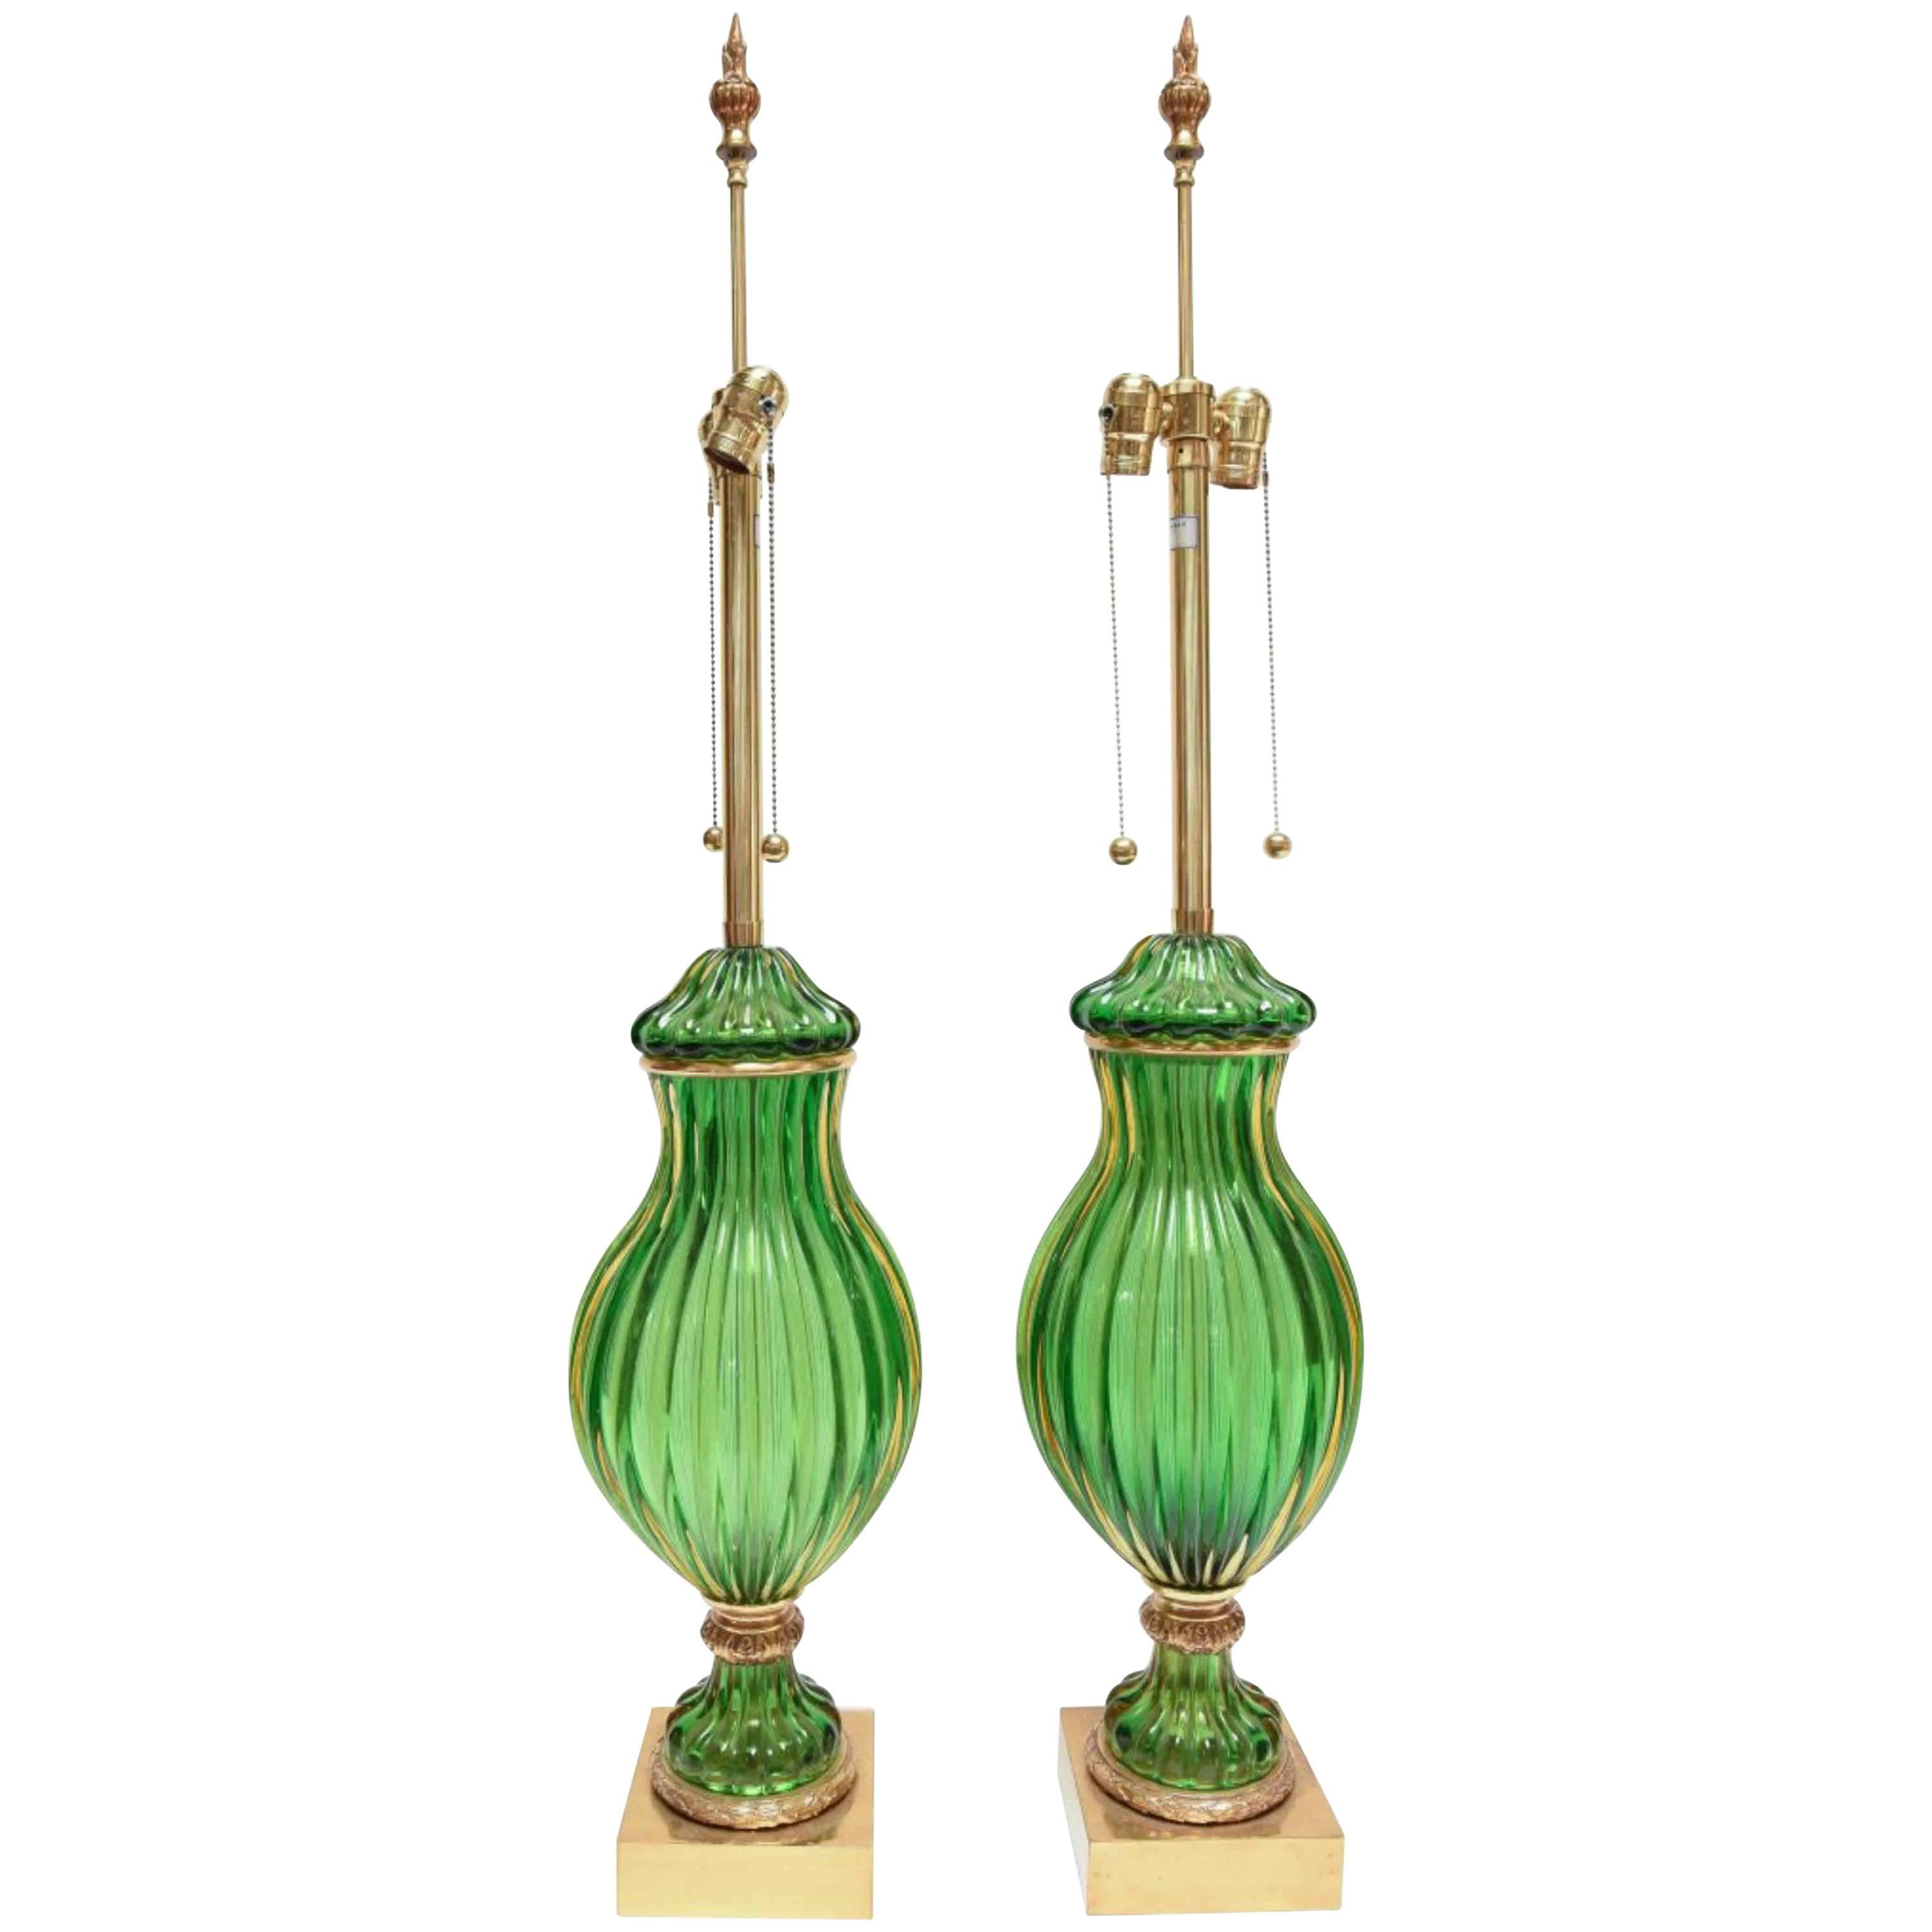 Monumental Marbro Pair of Lamps in Murano Glass